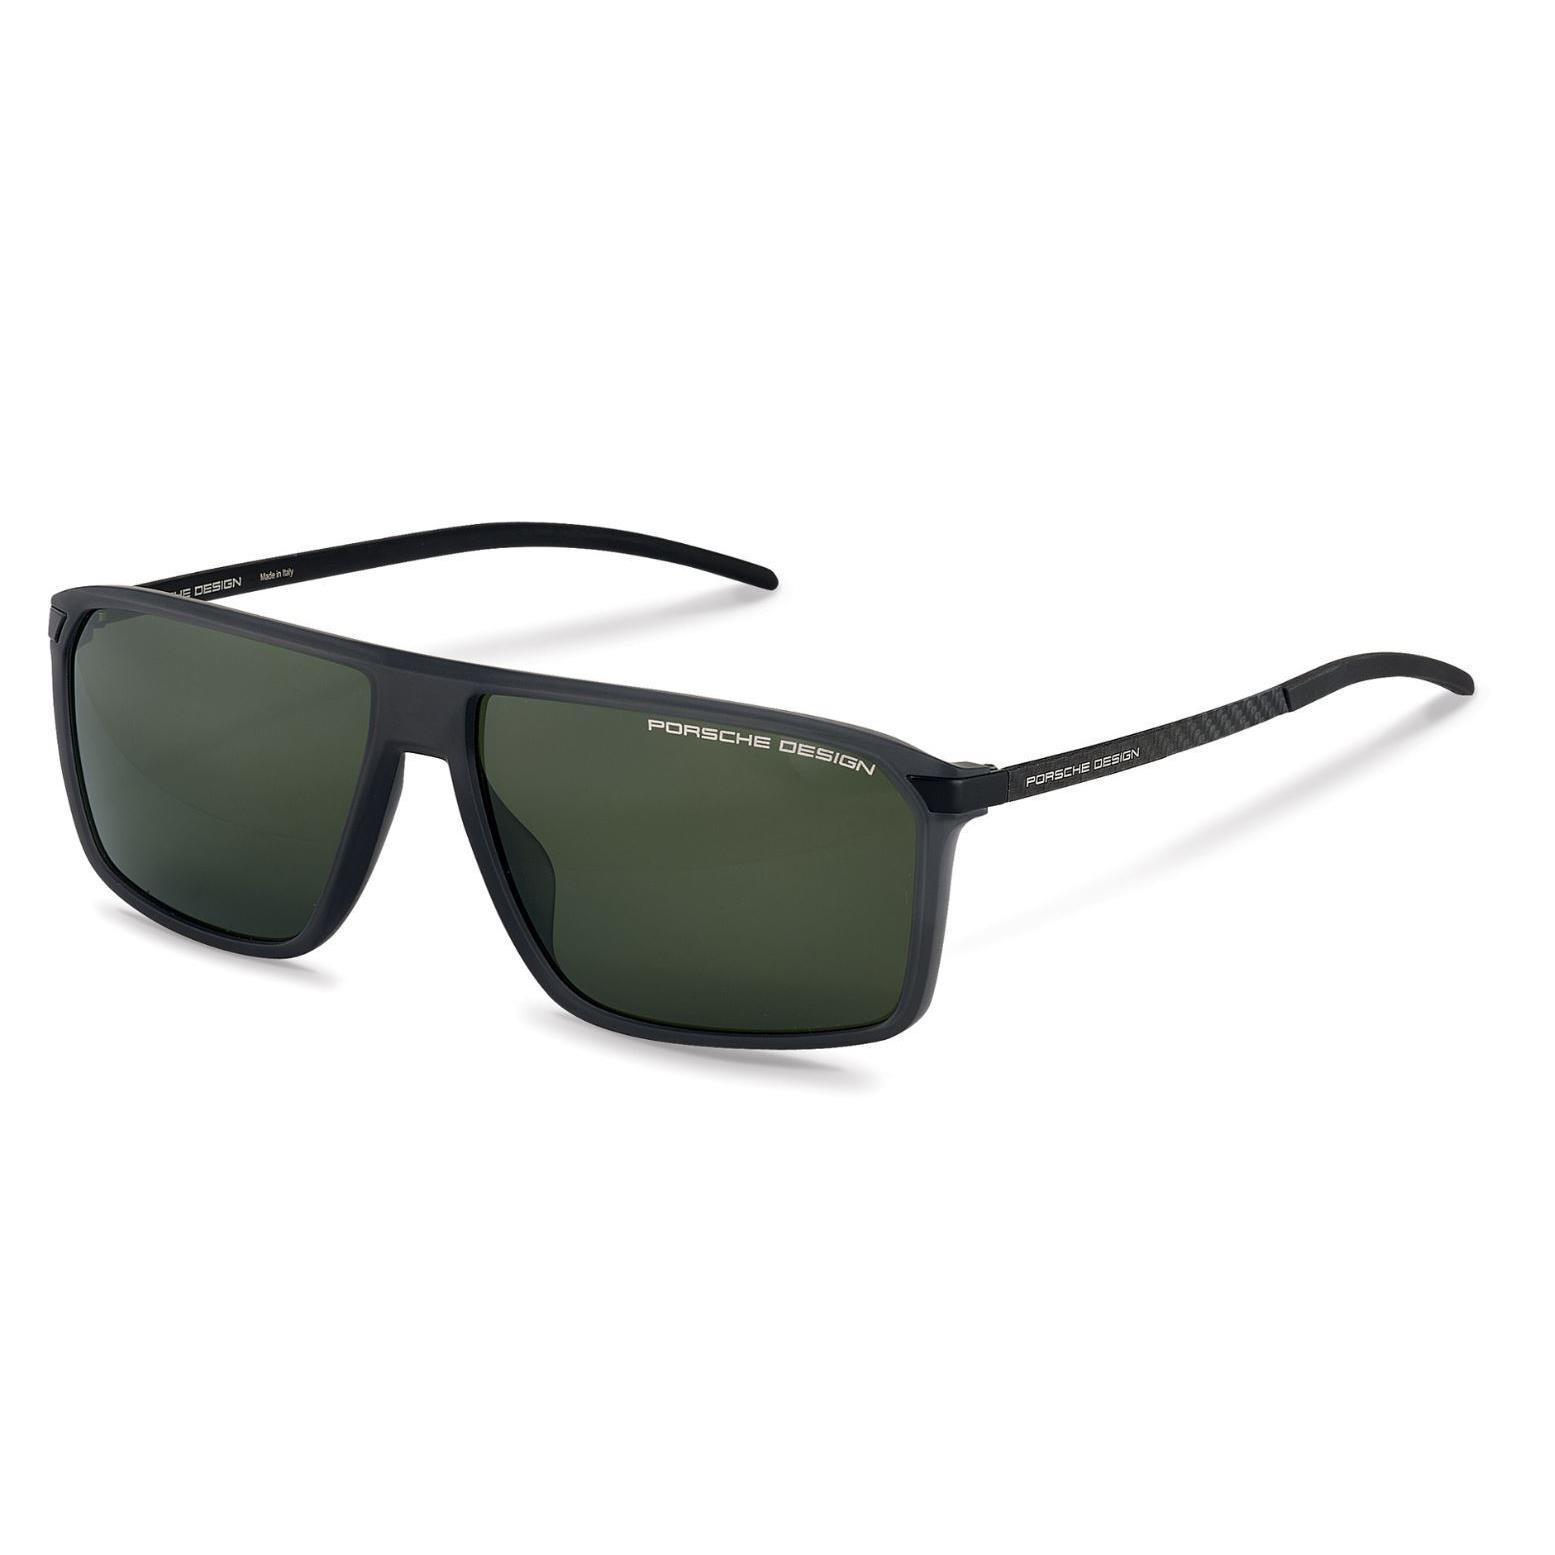 Porsche Design P 8653 B Grey Polarized Sunglasses